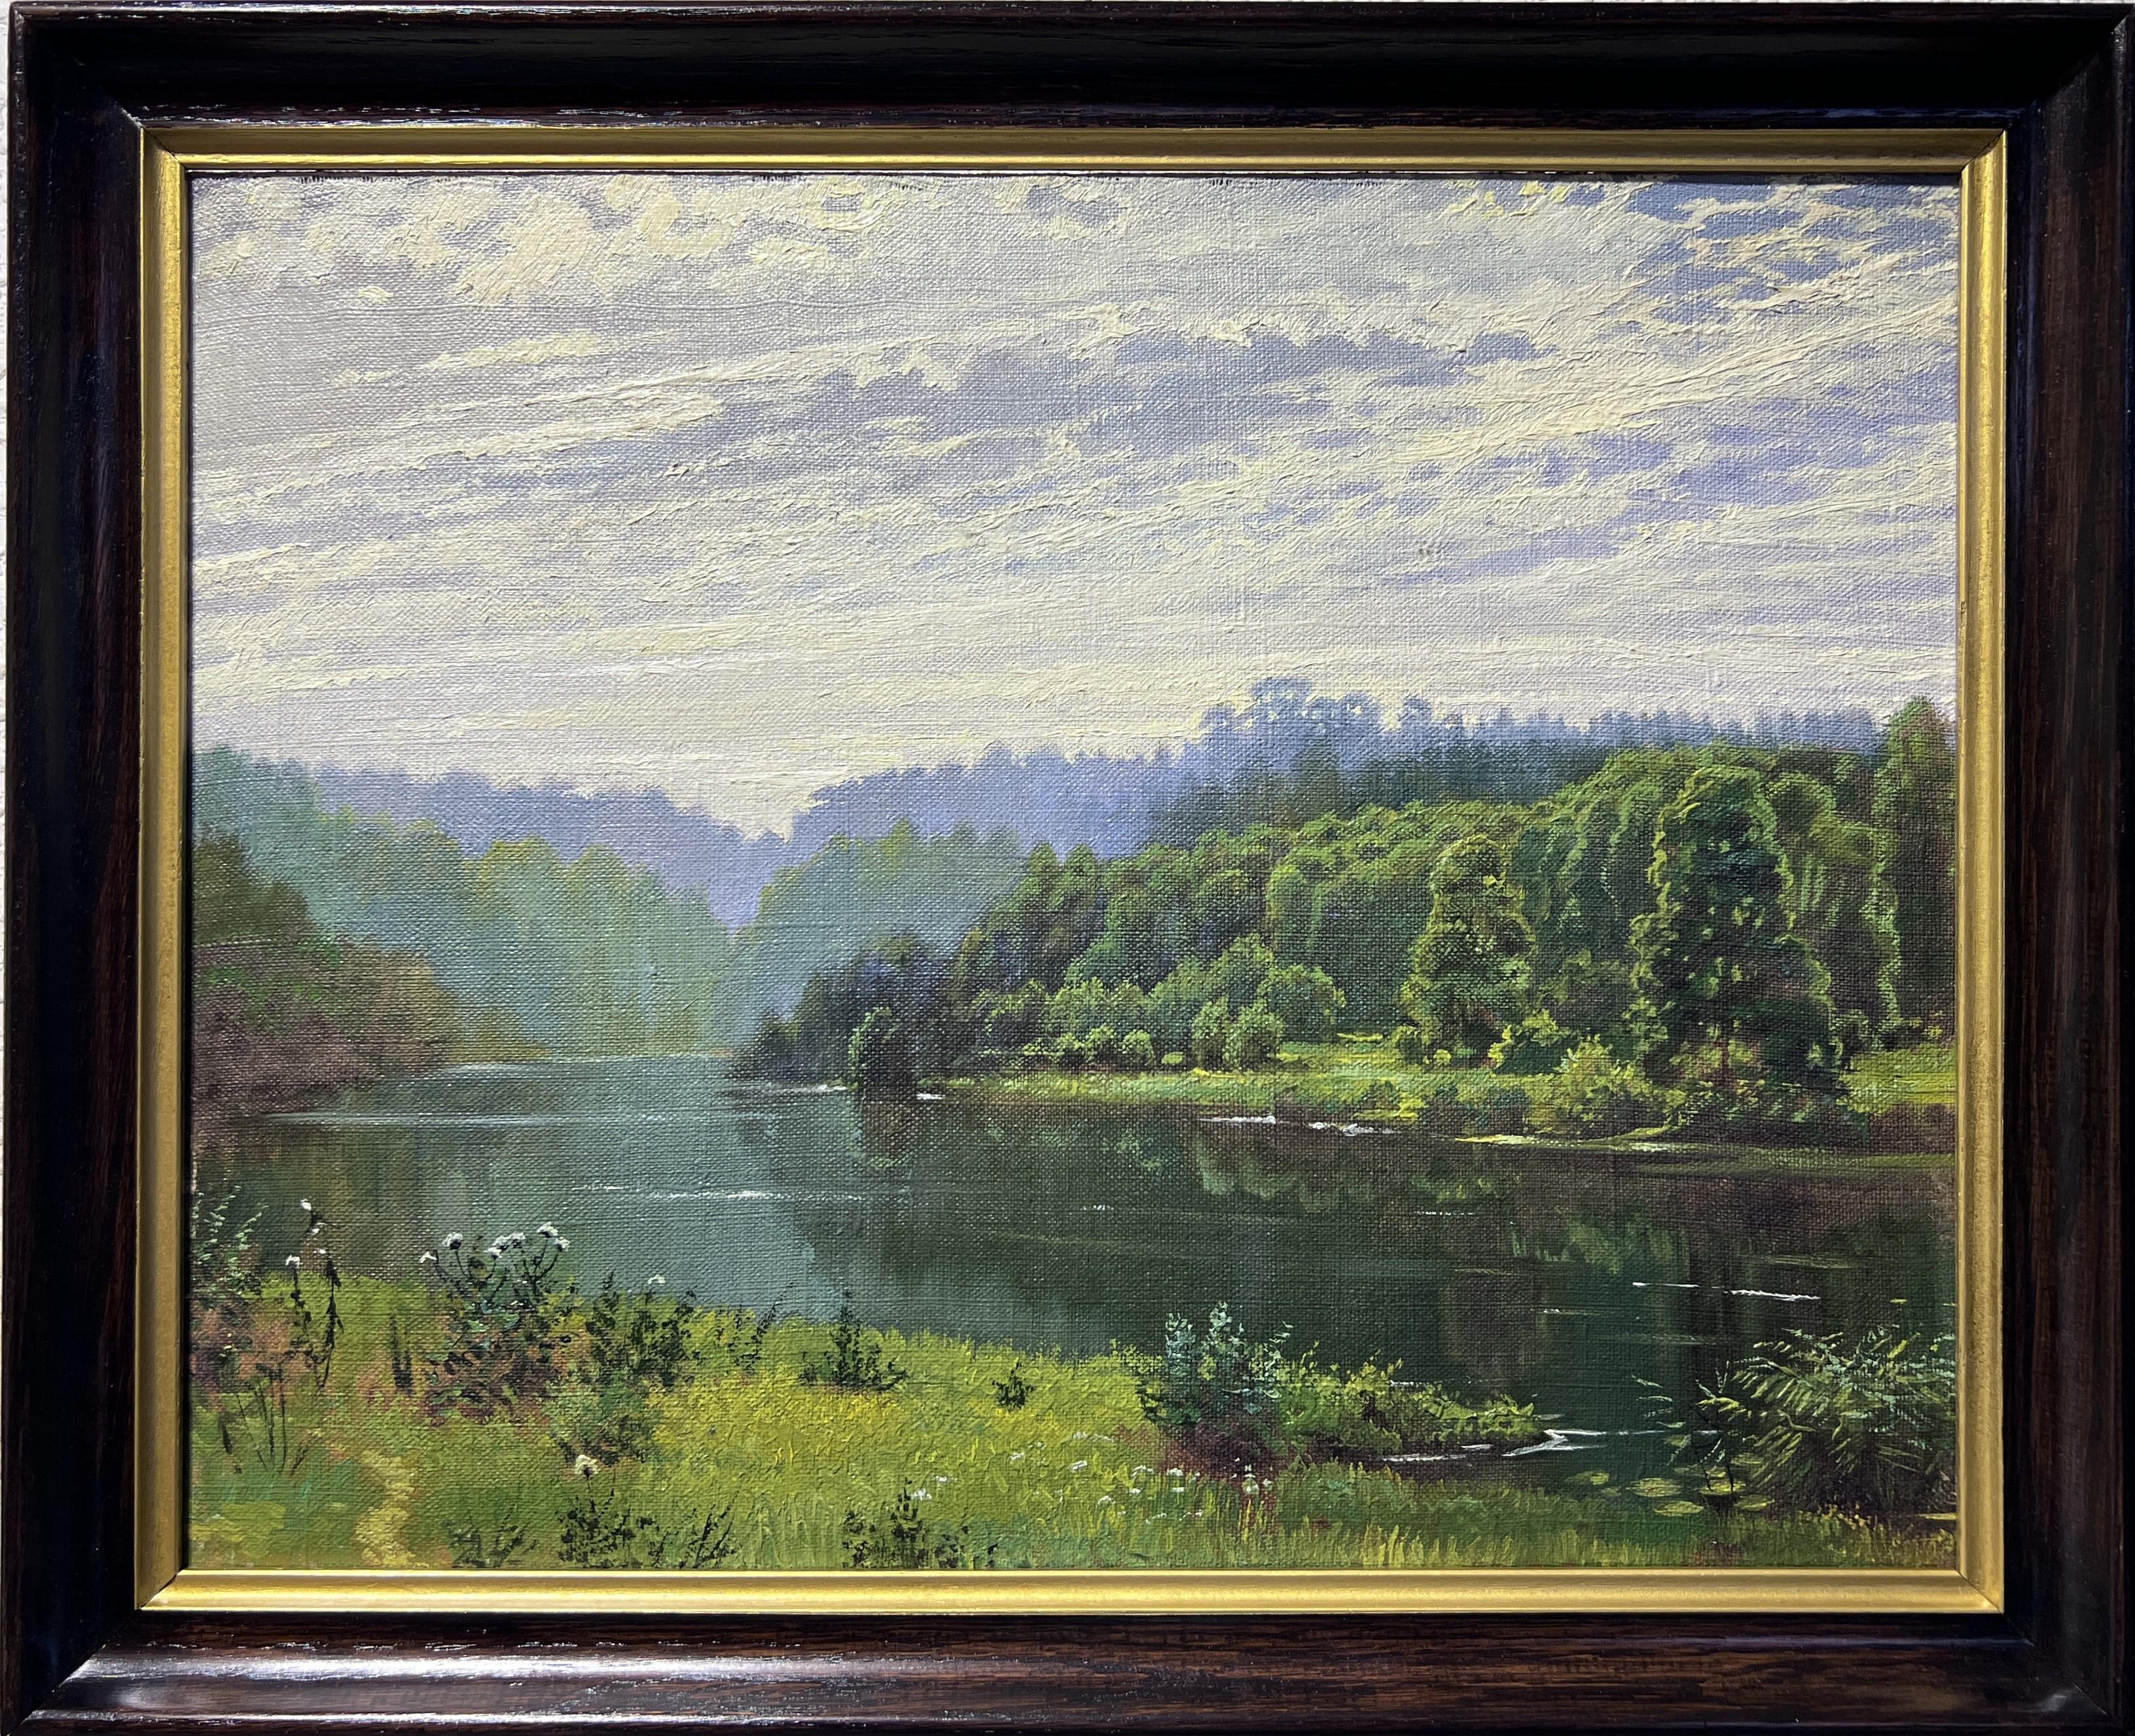 Unknown Landscape Painting - Original Vintage oil painting on canvas, Summer Landscape "Foggy Morning" Signed